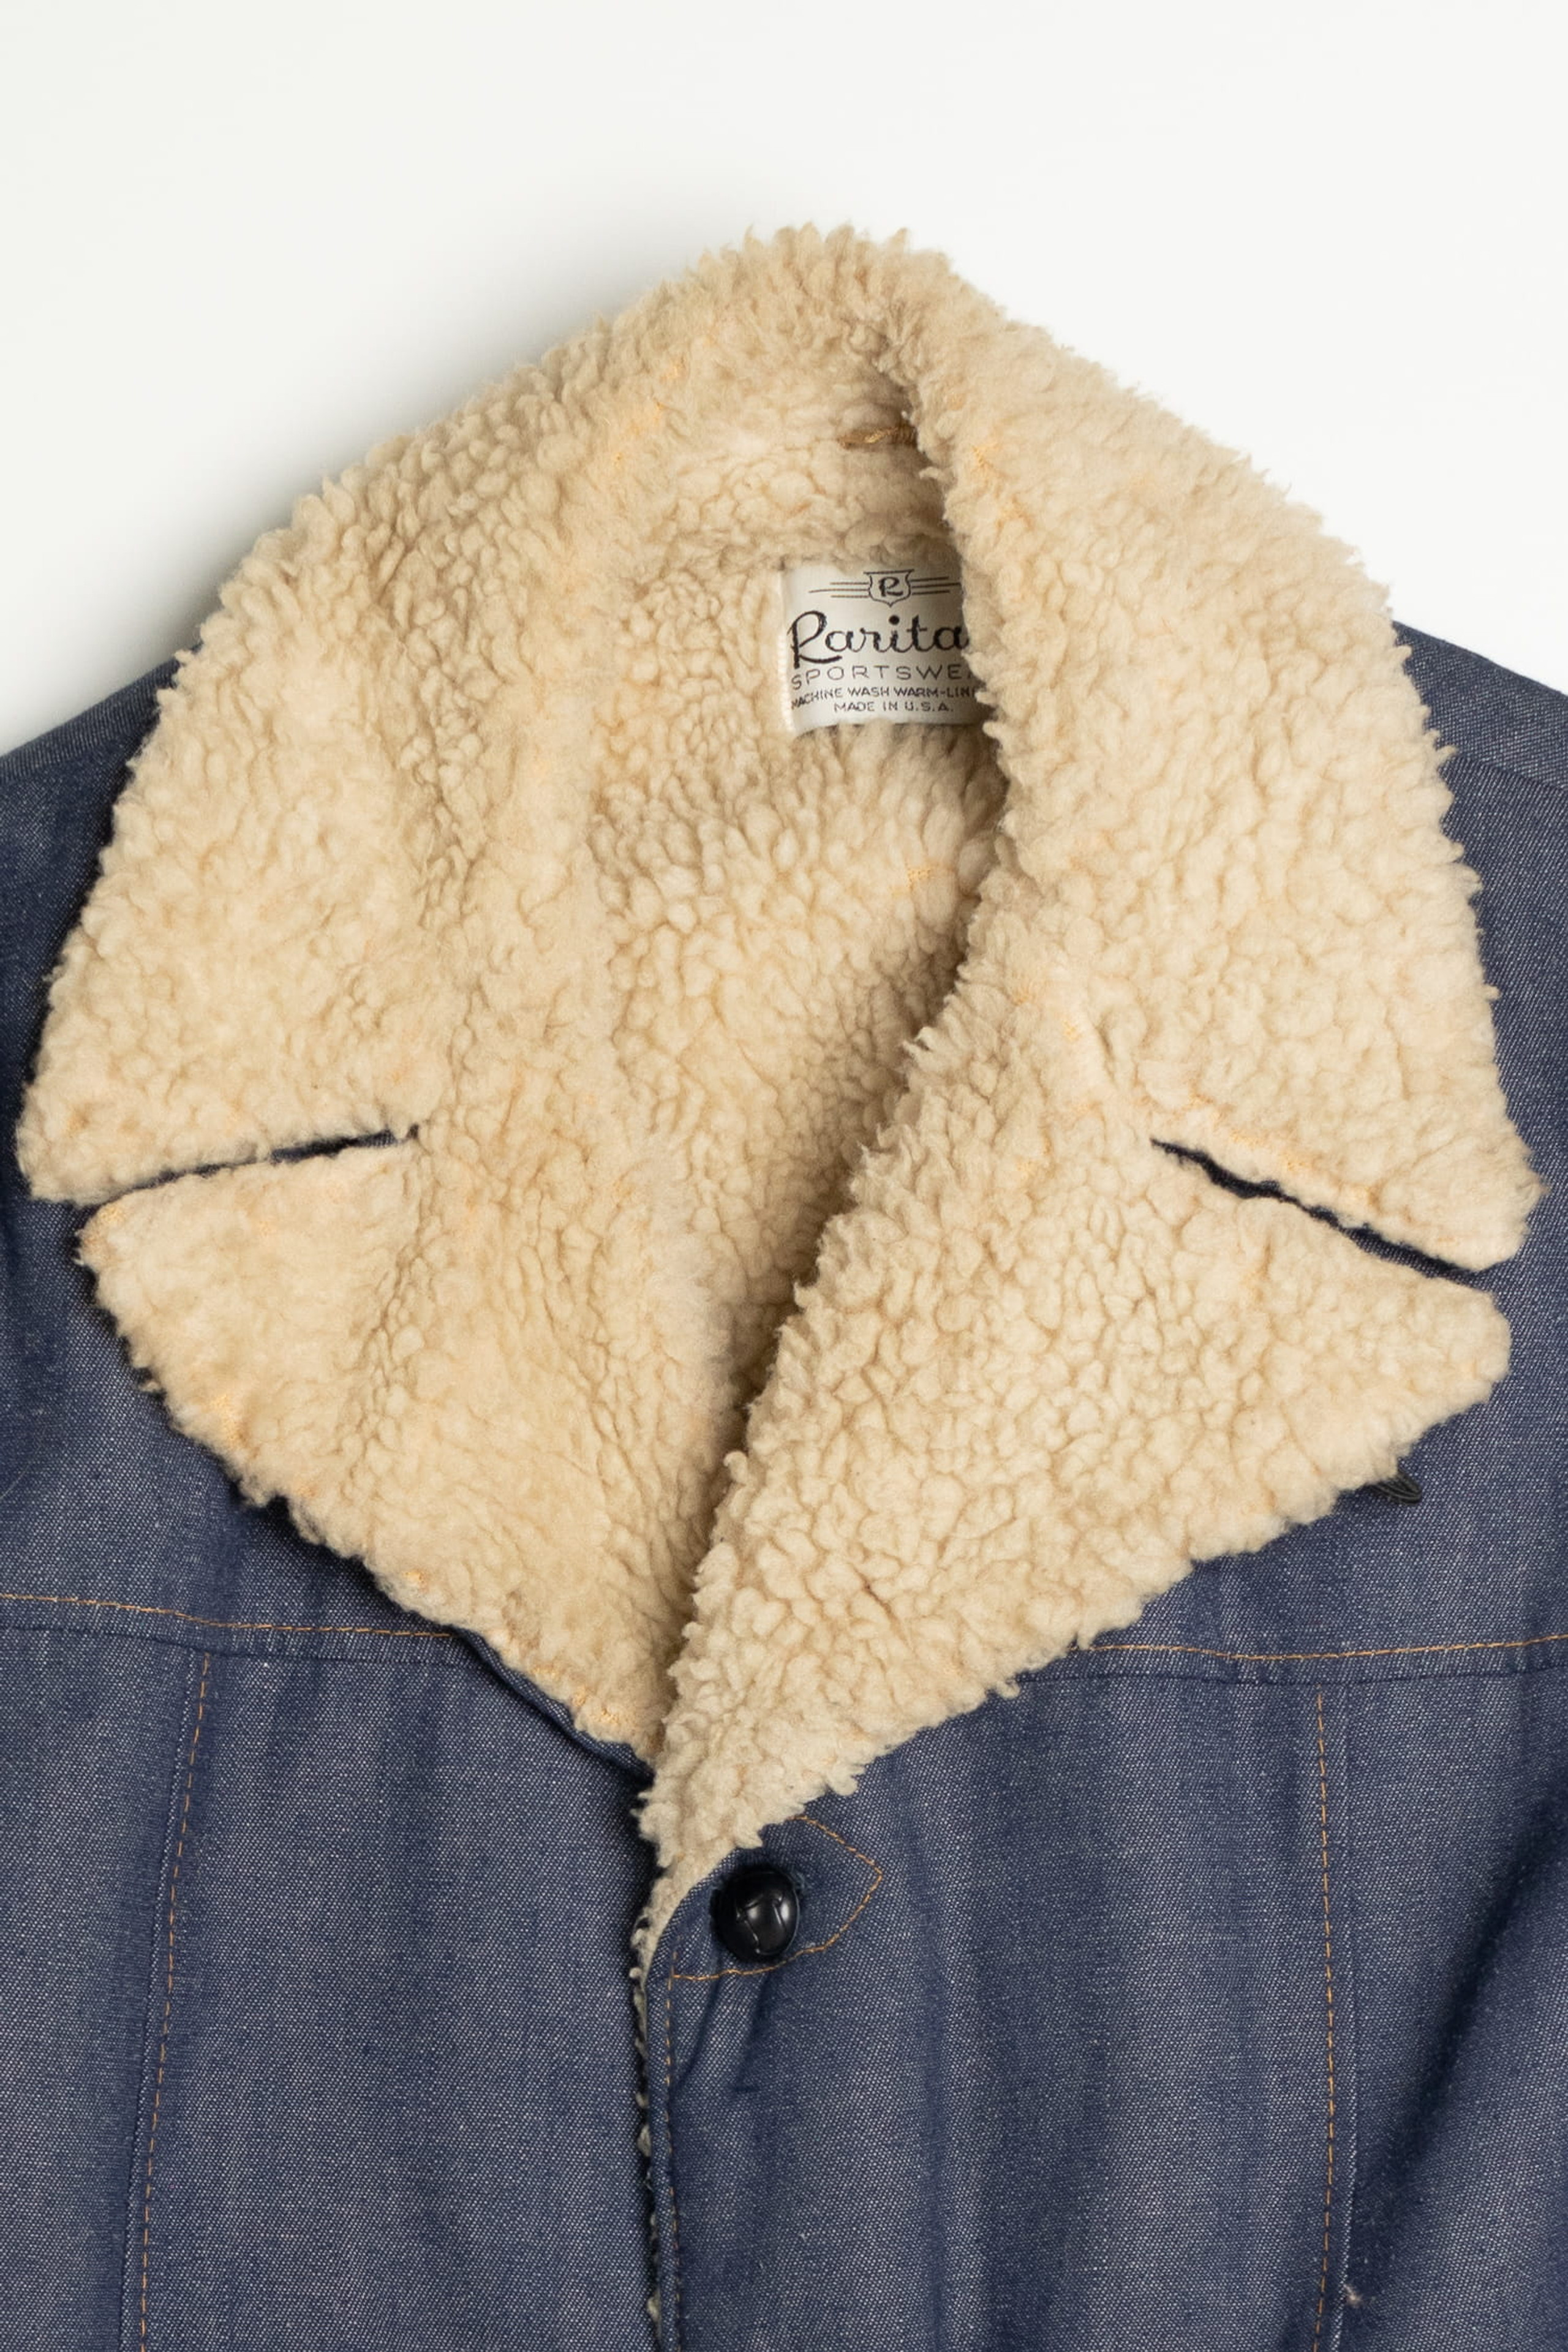 Vintage Raritan Denim Jacket - Ragstock.com